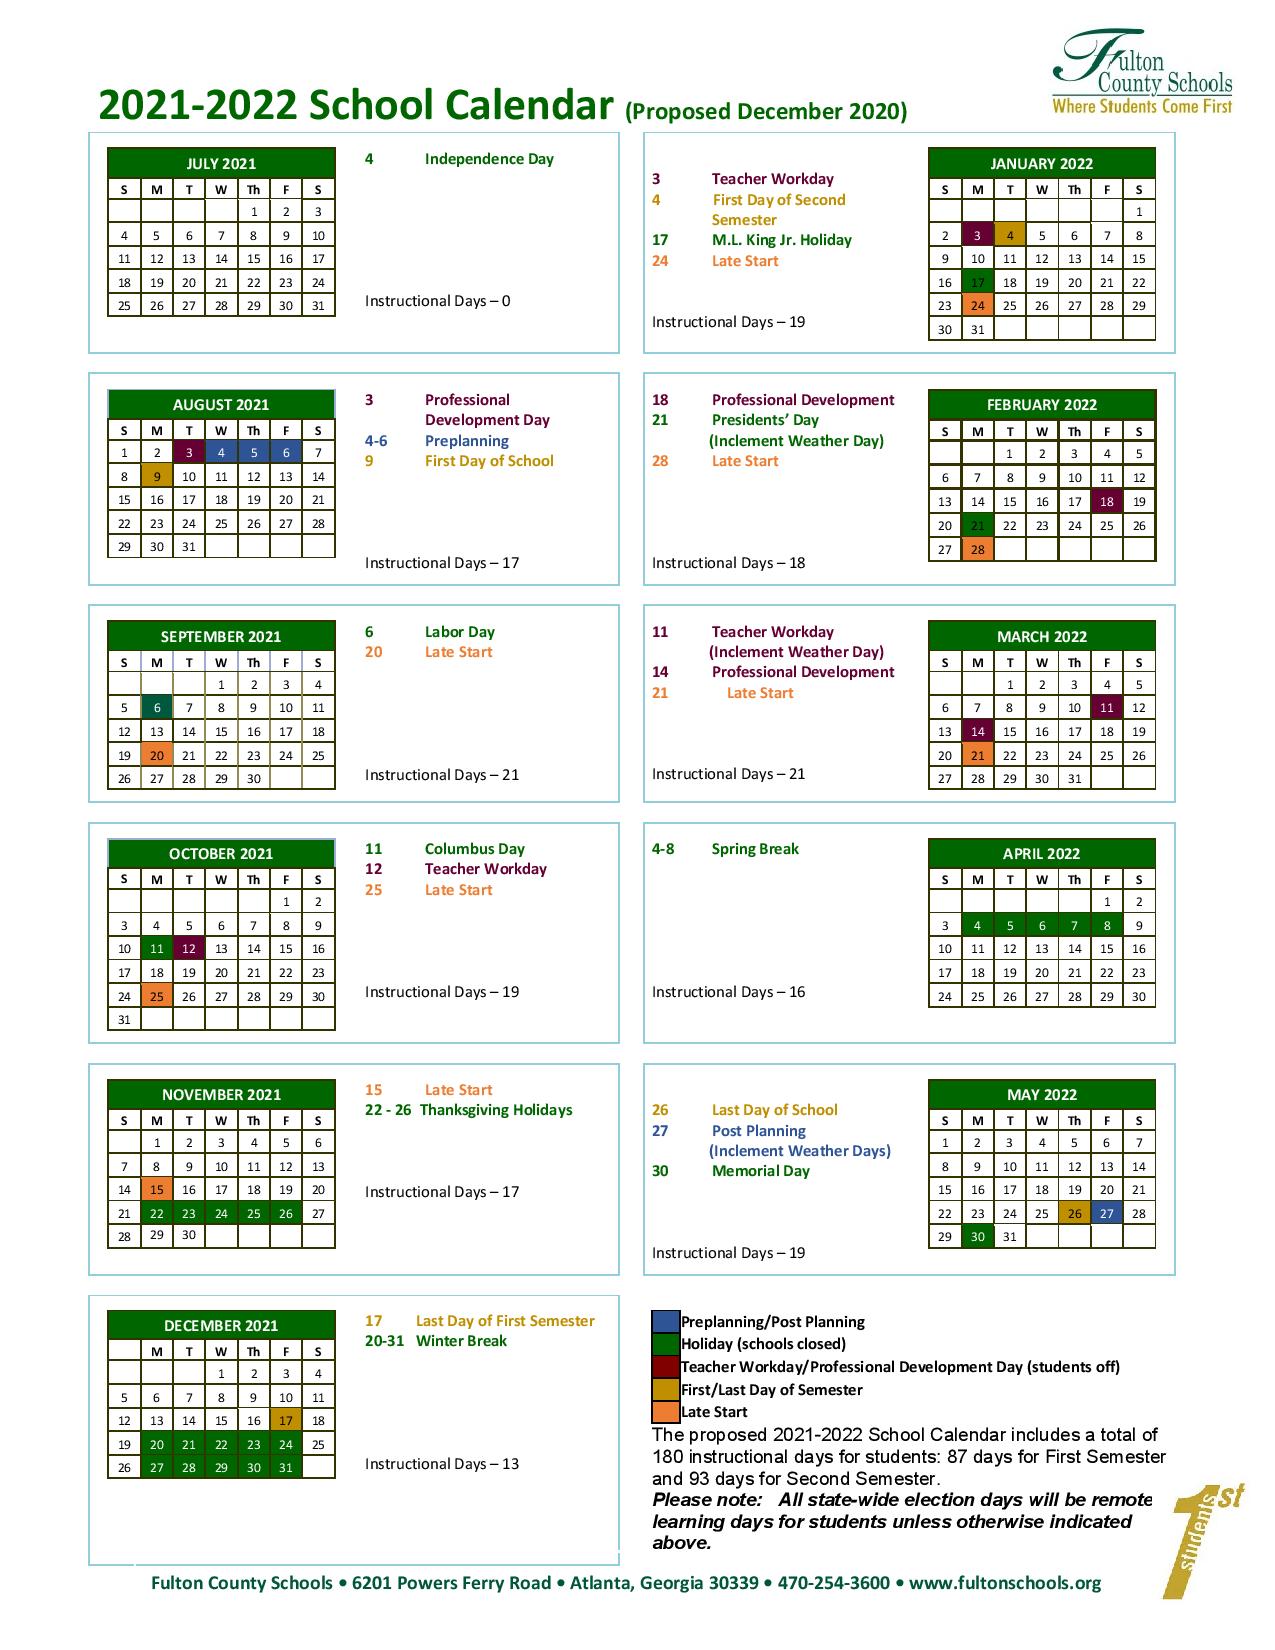 Fulton County School Calendar 2021 2022 In Pdf